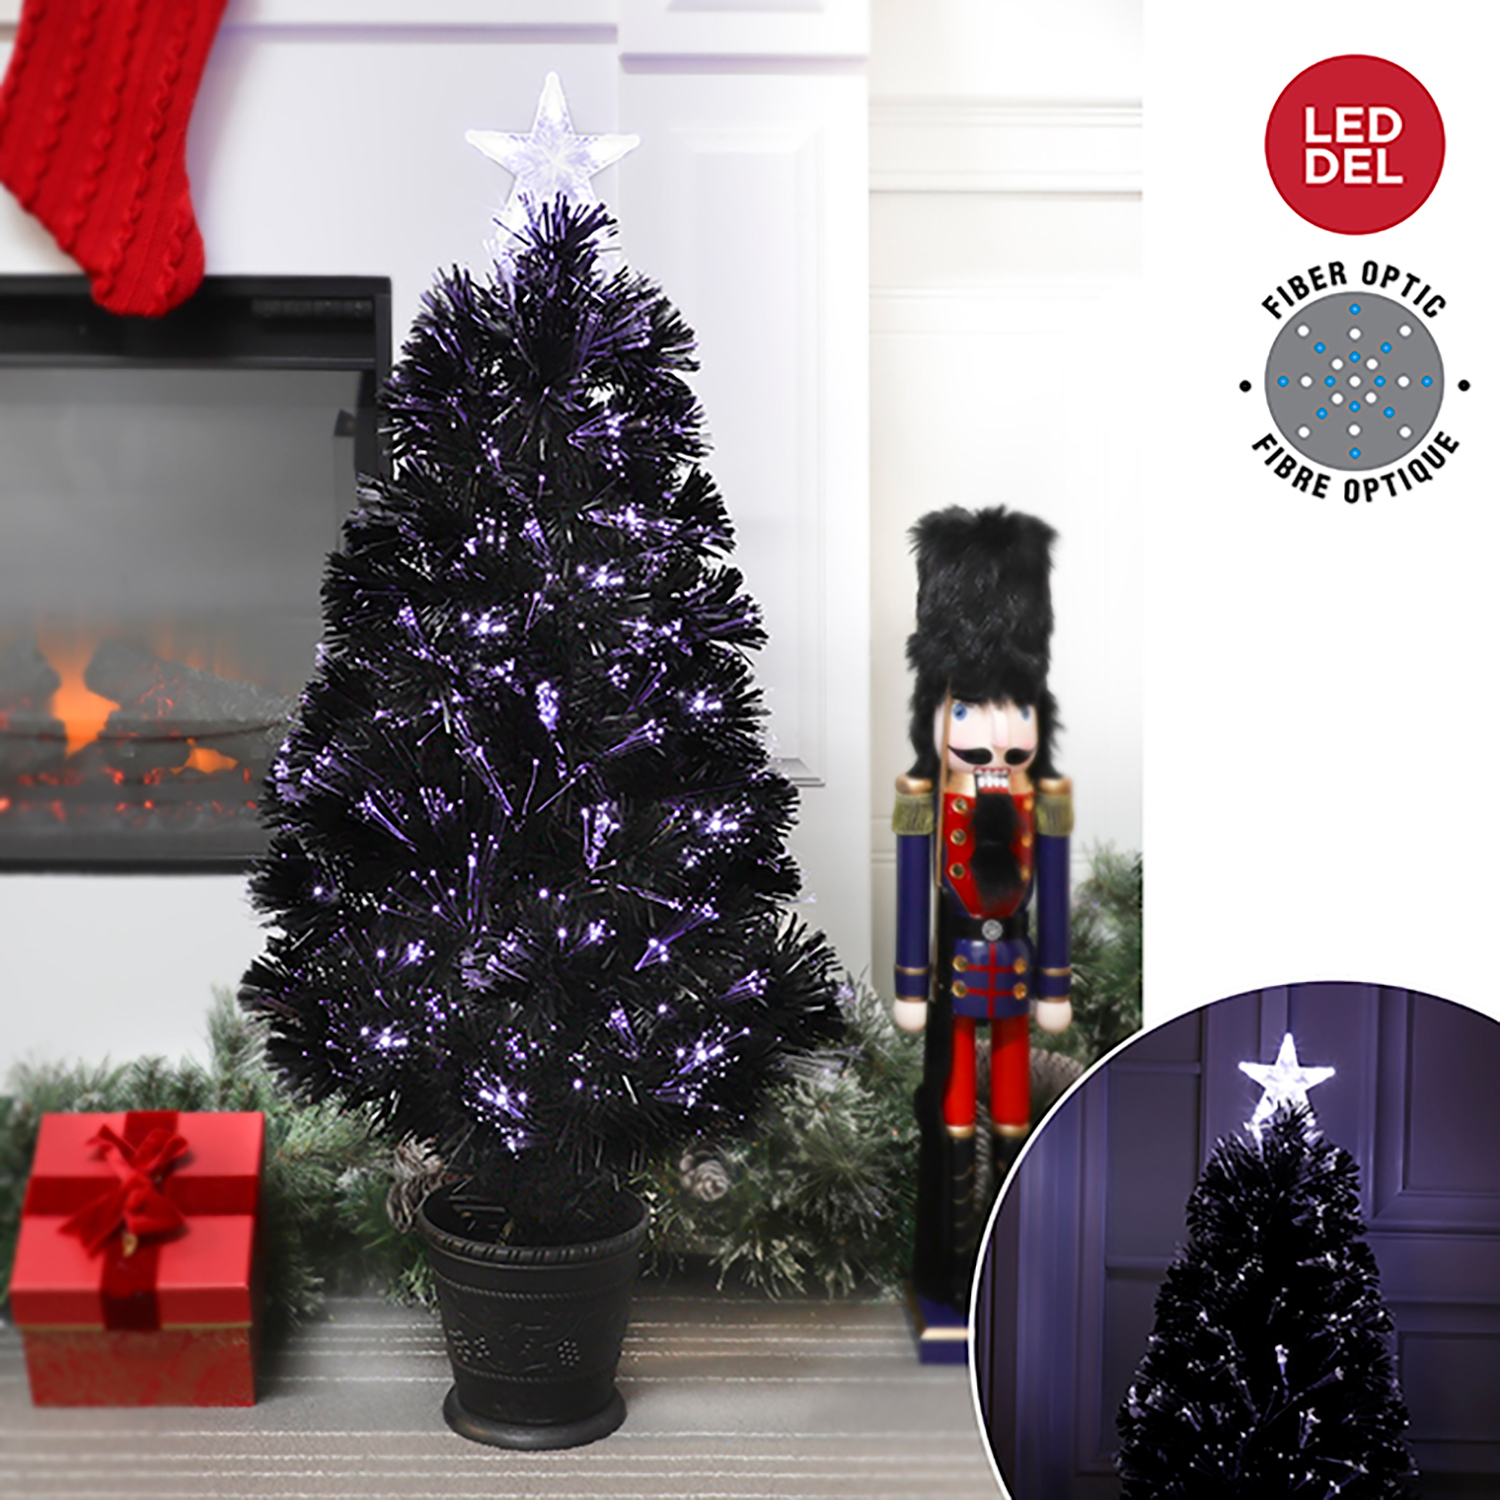 Danson - Black fiber optic LED Christmas tree with stand, 3'